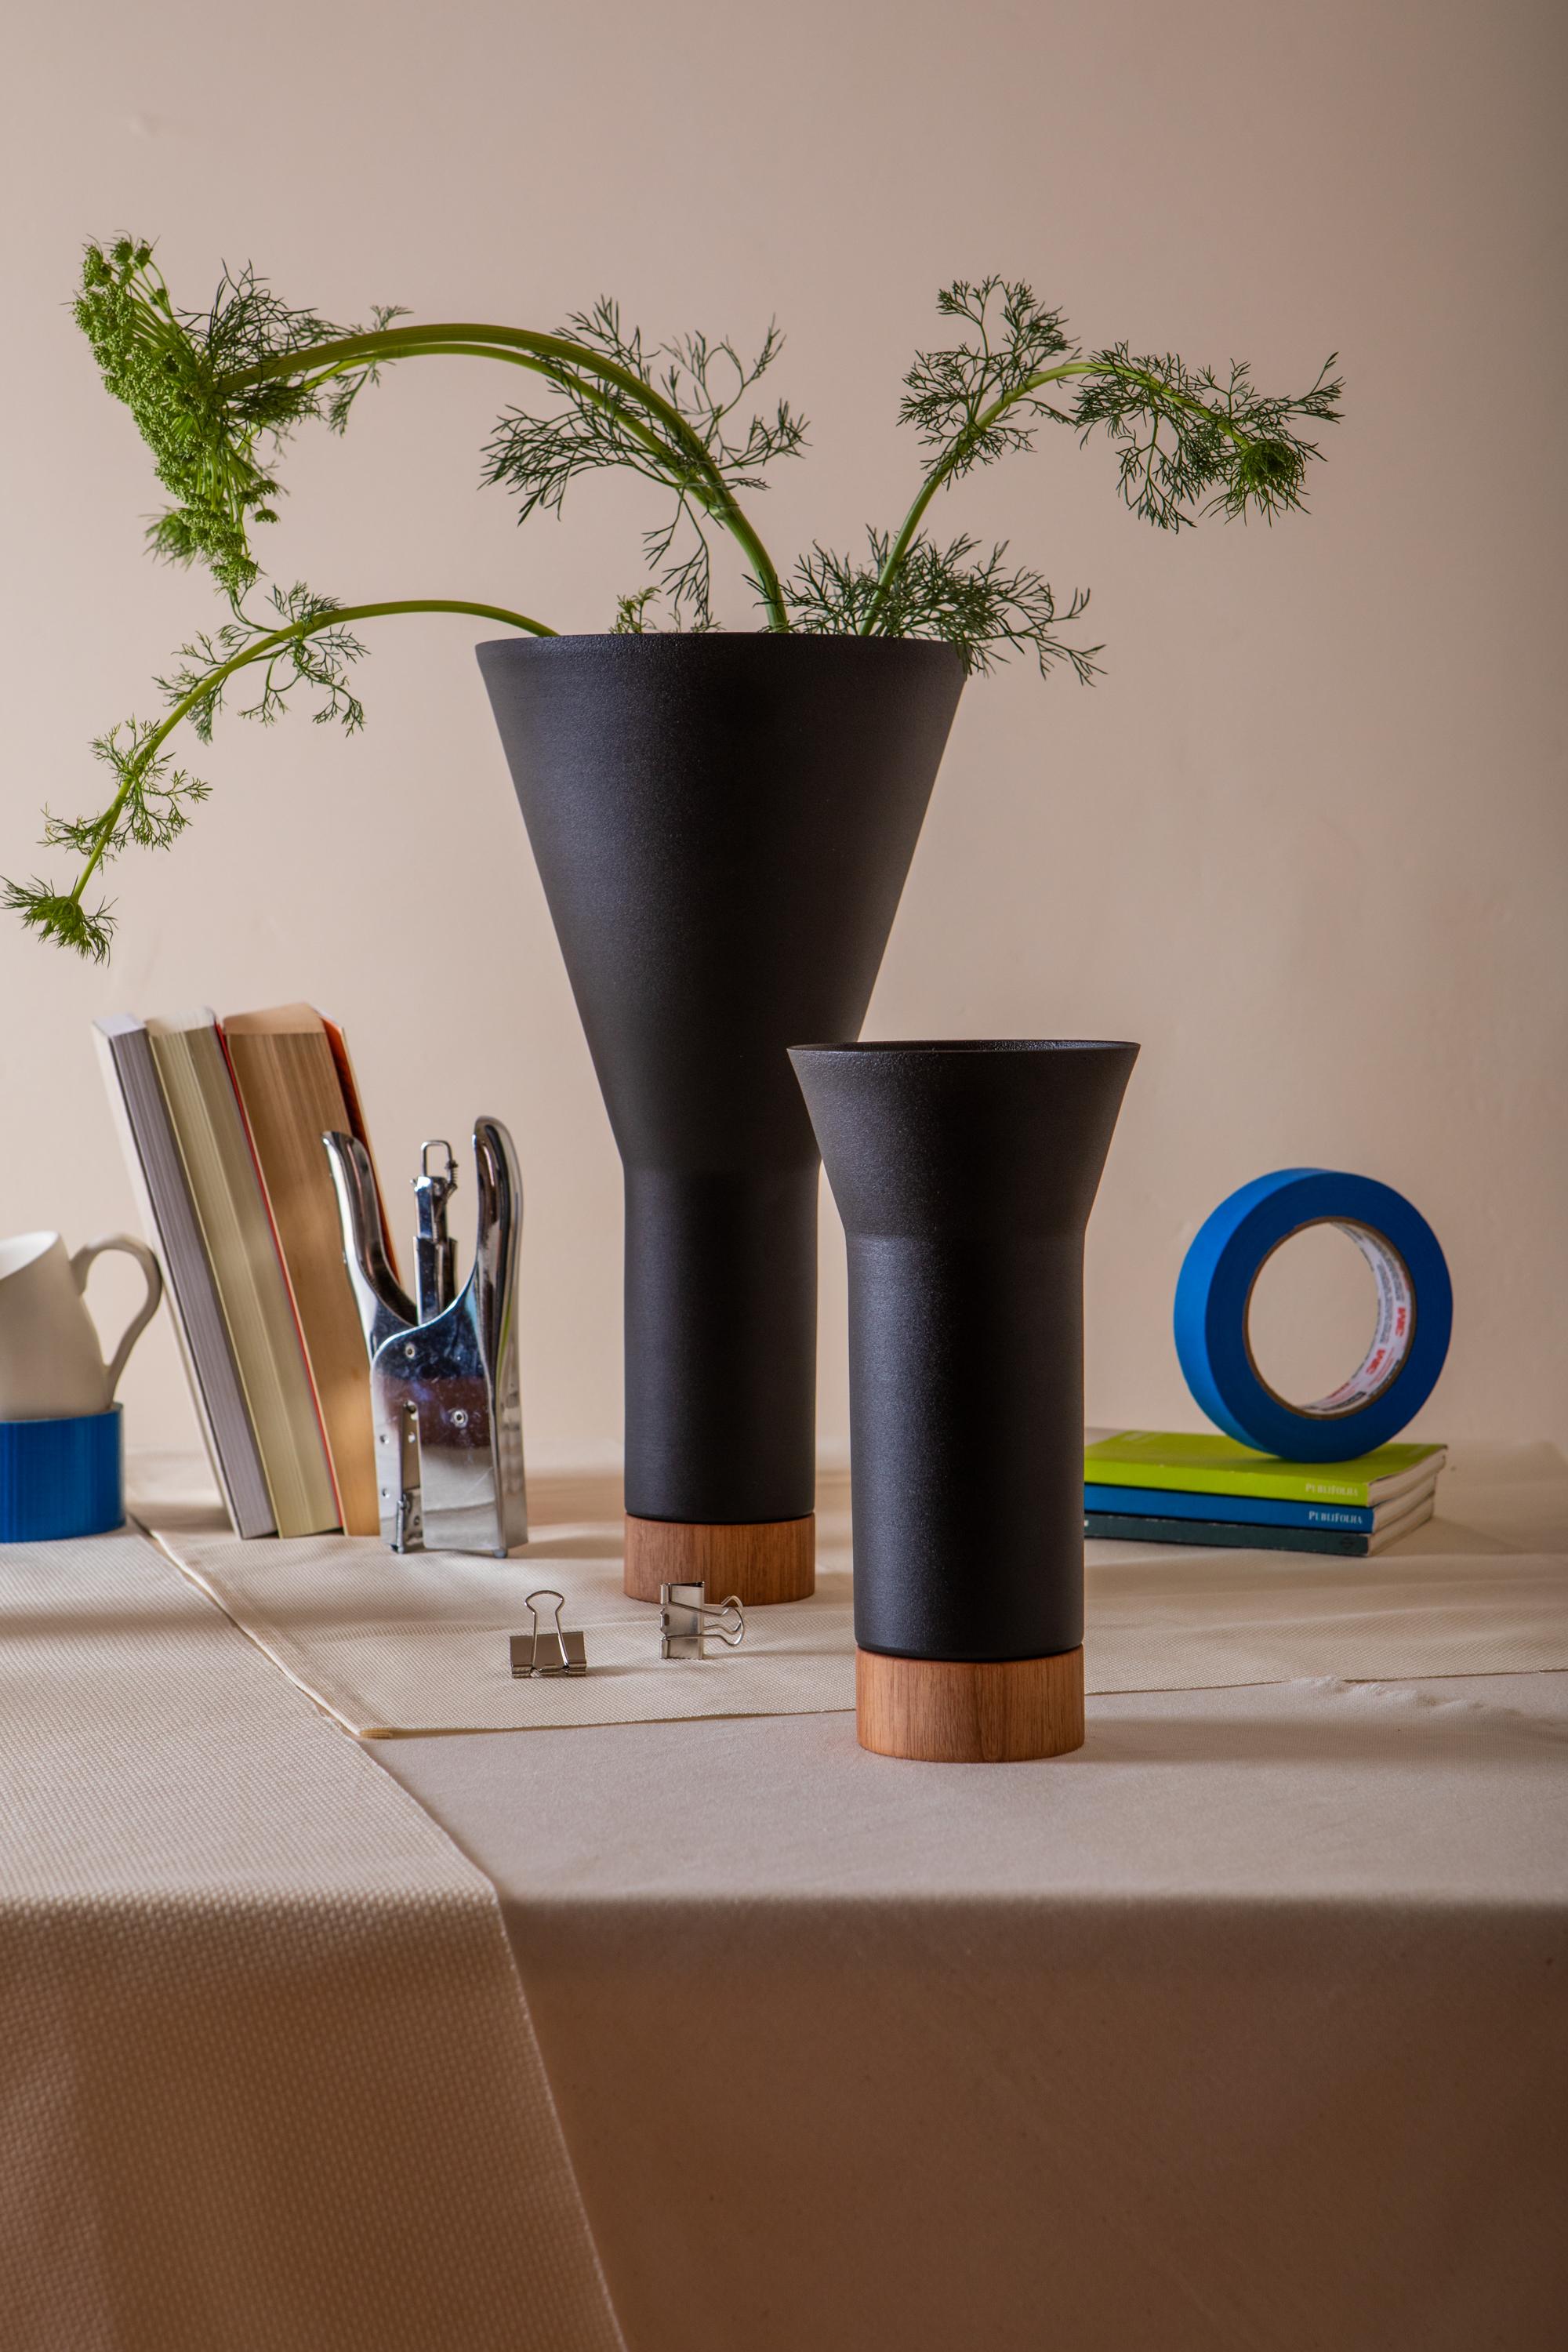 Powder-Coated Farol Vases (Set of 3) by Estúdio Dentro, Brazilian Contemporary Design For Sale